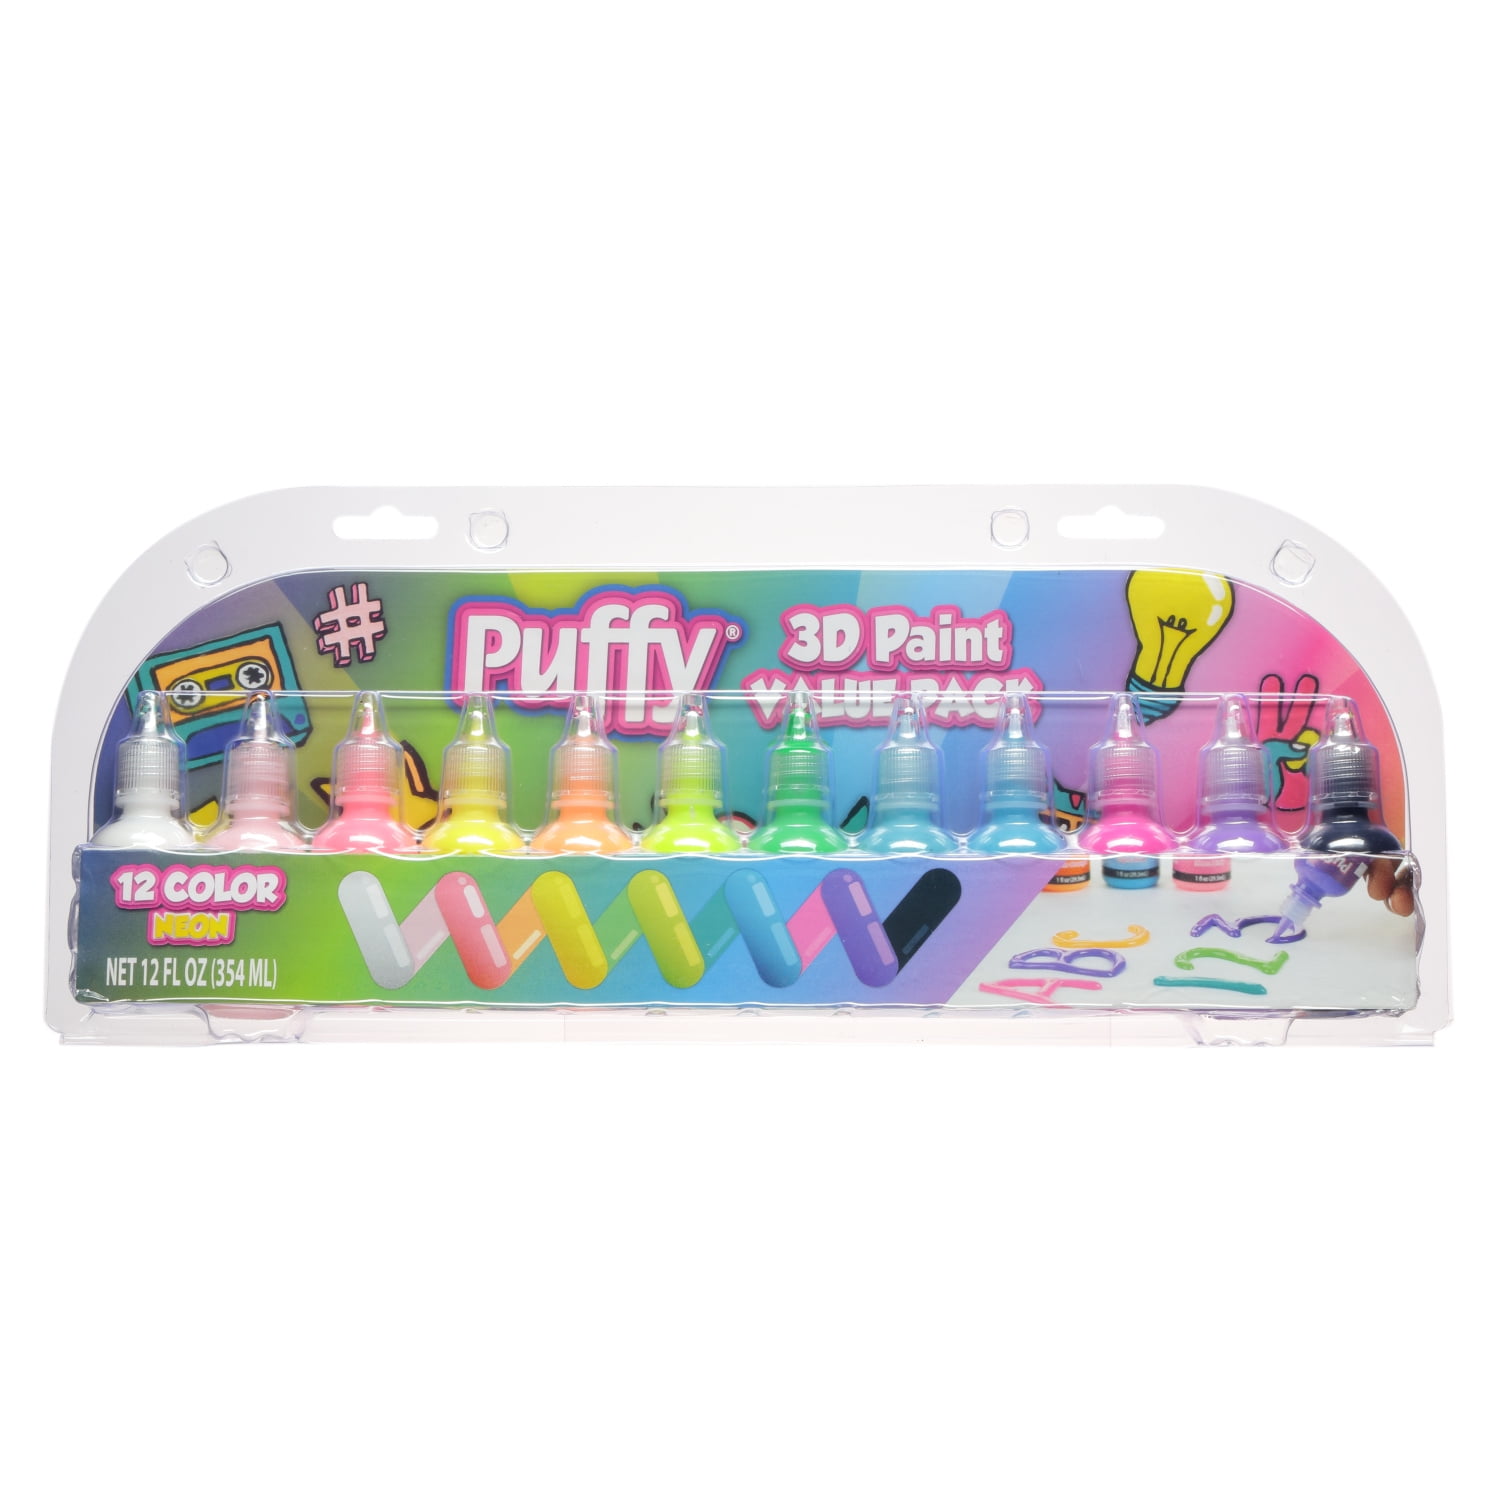  Tulip Puffy 3D Paint, Neon Colors, Set of 12 : Arts